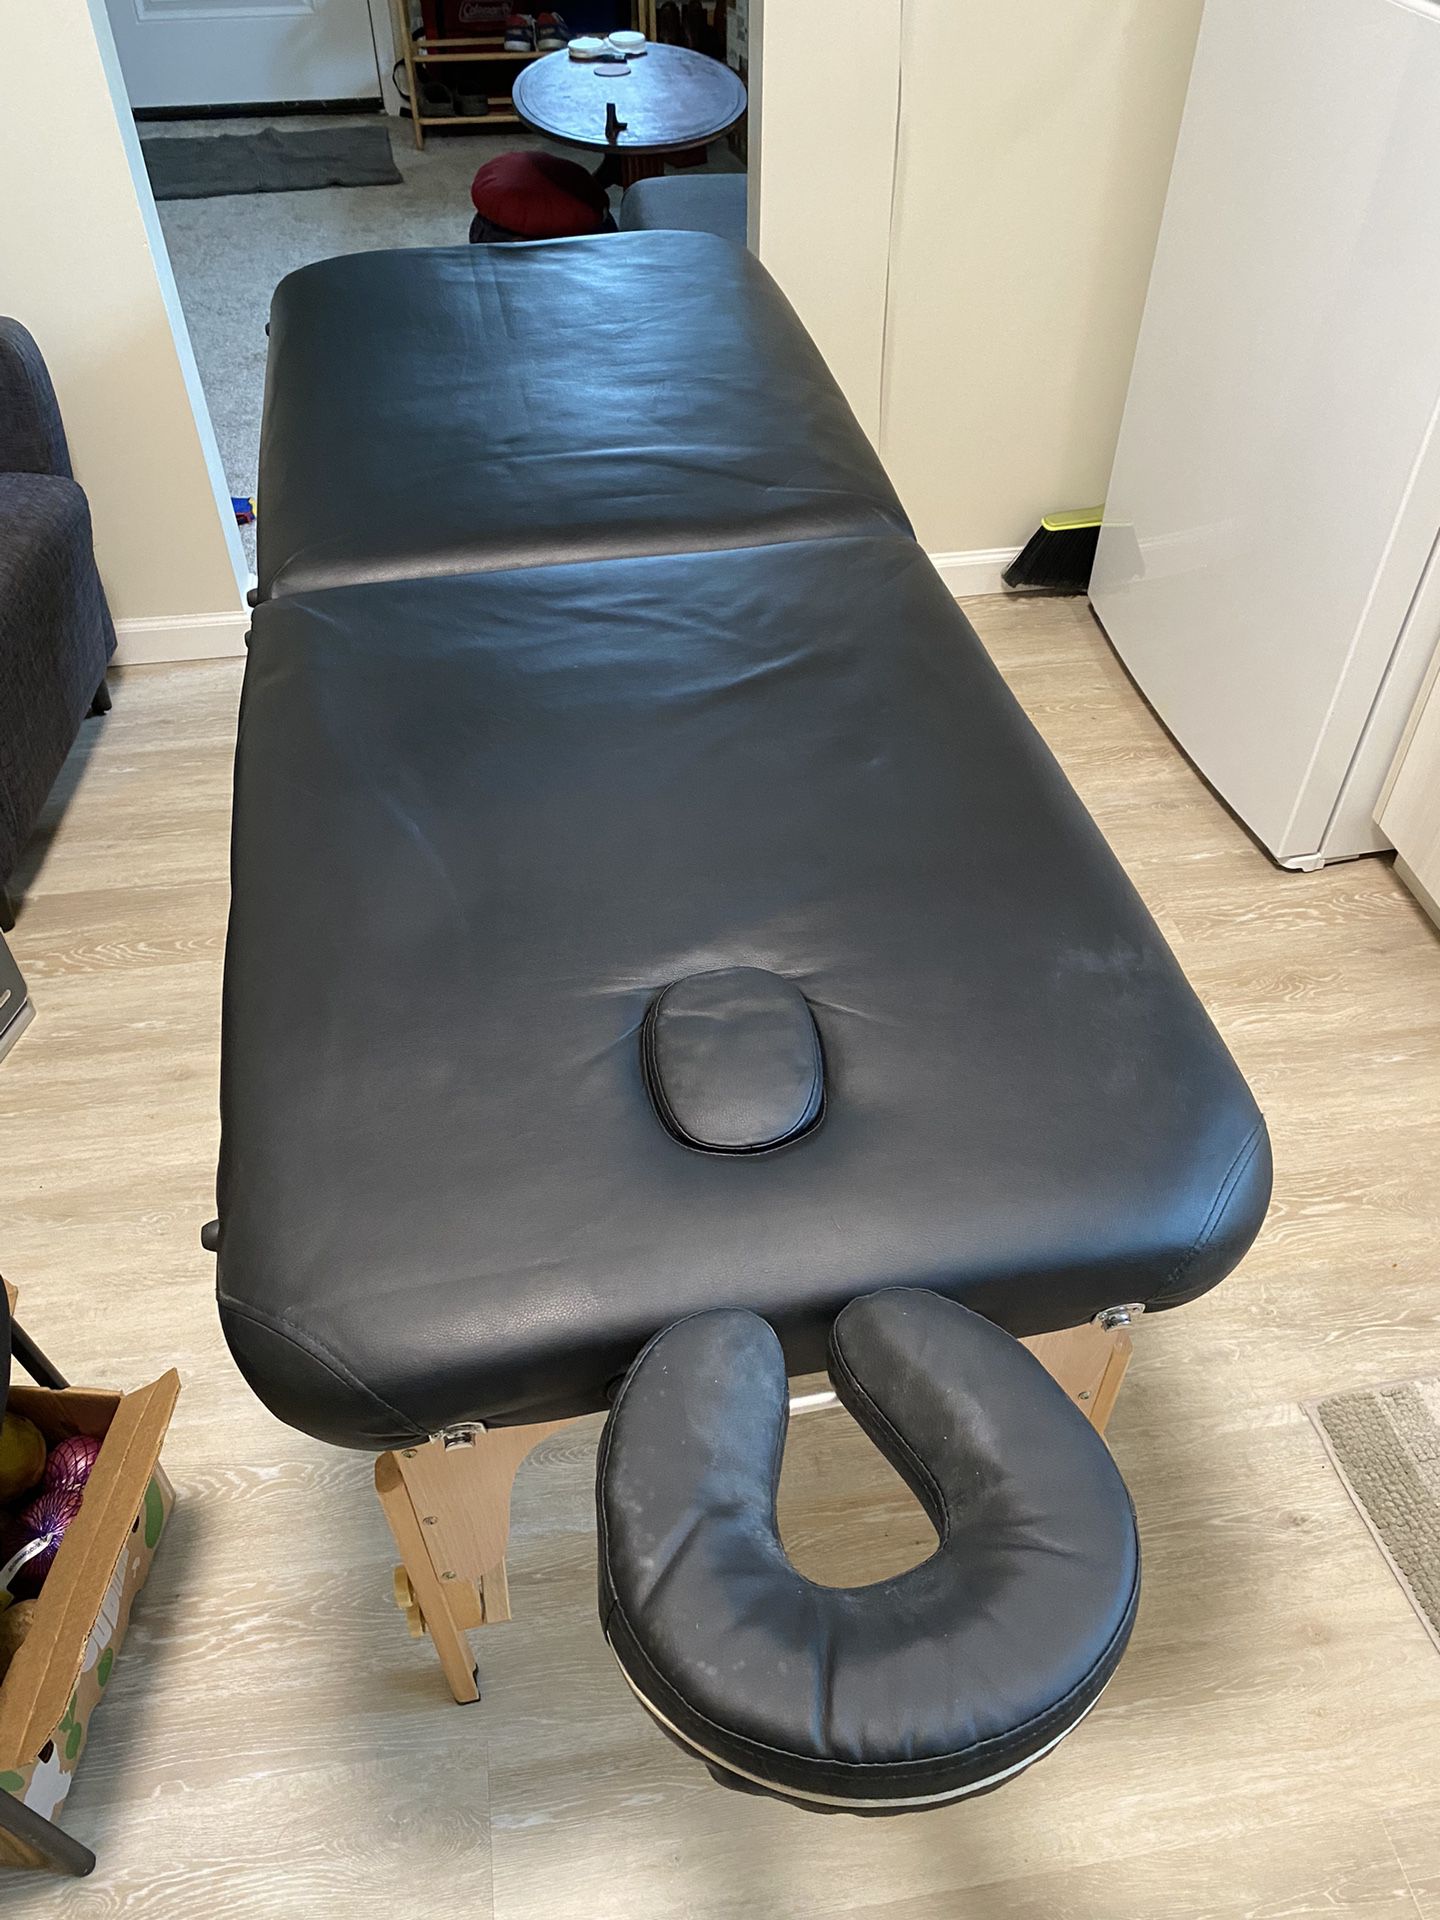 Portable Massage Table